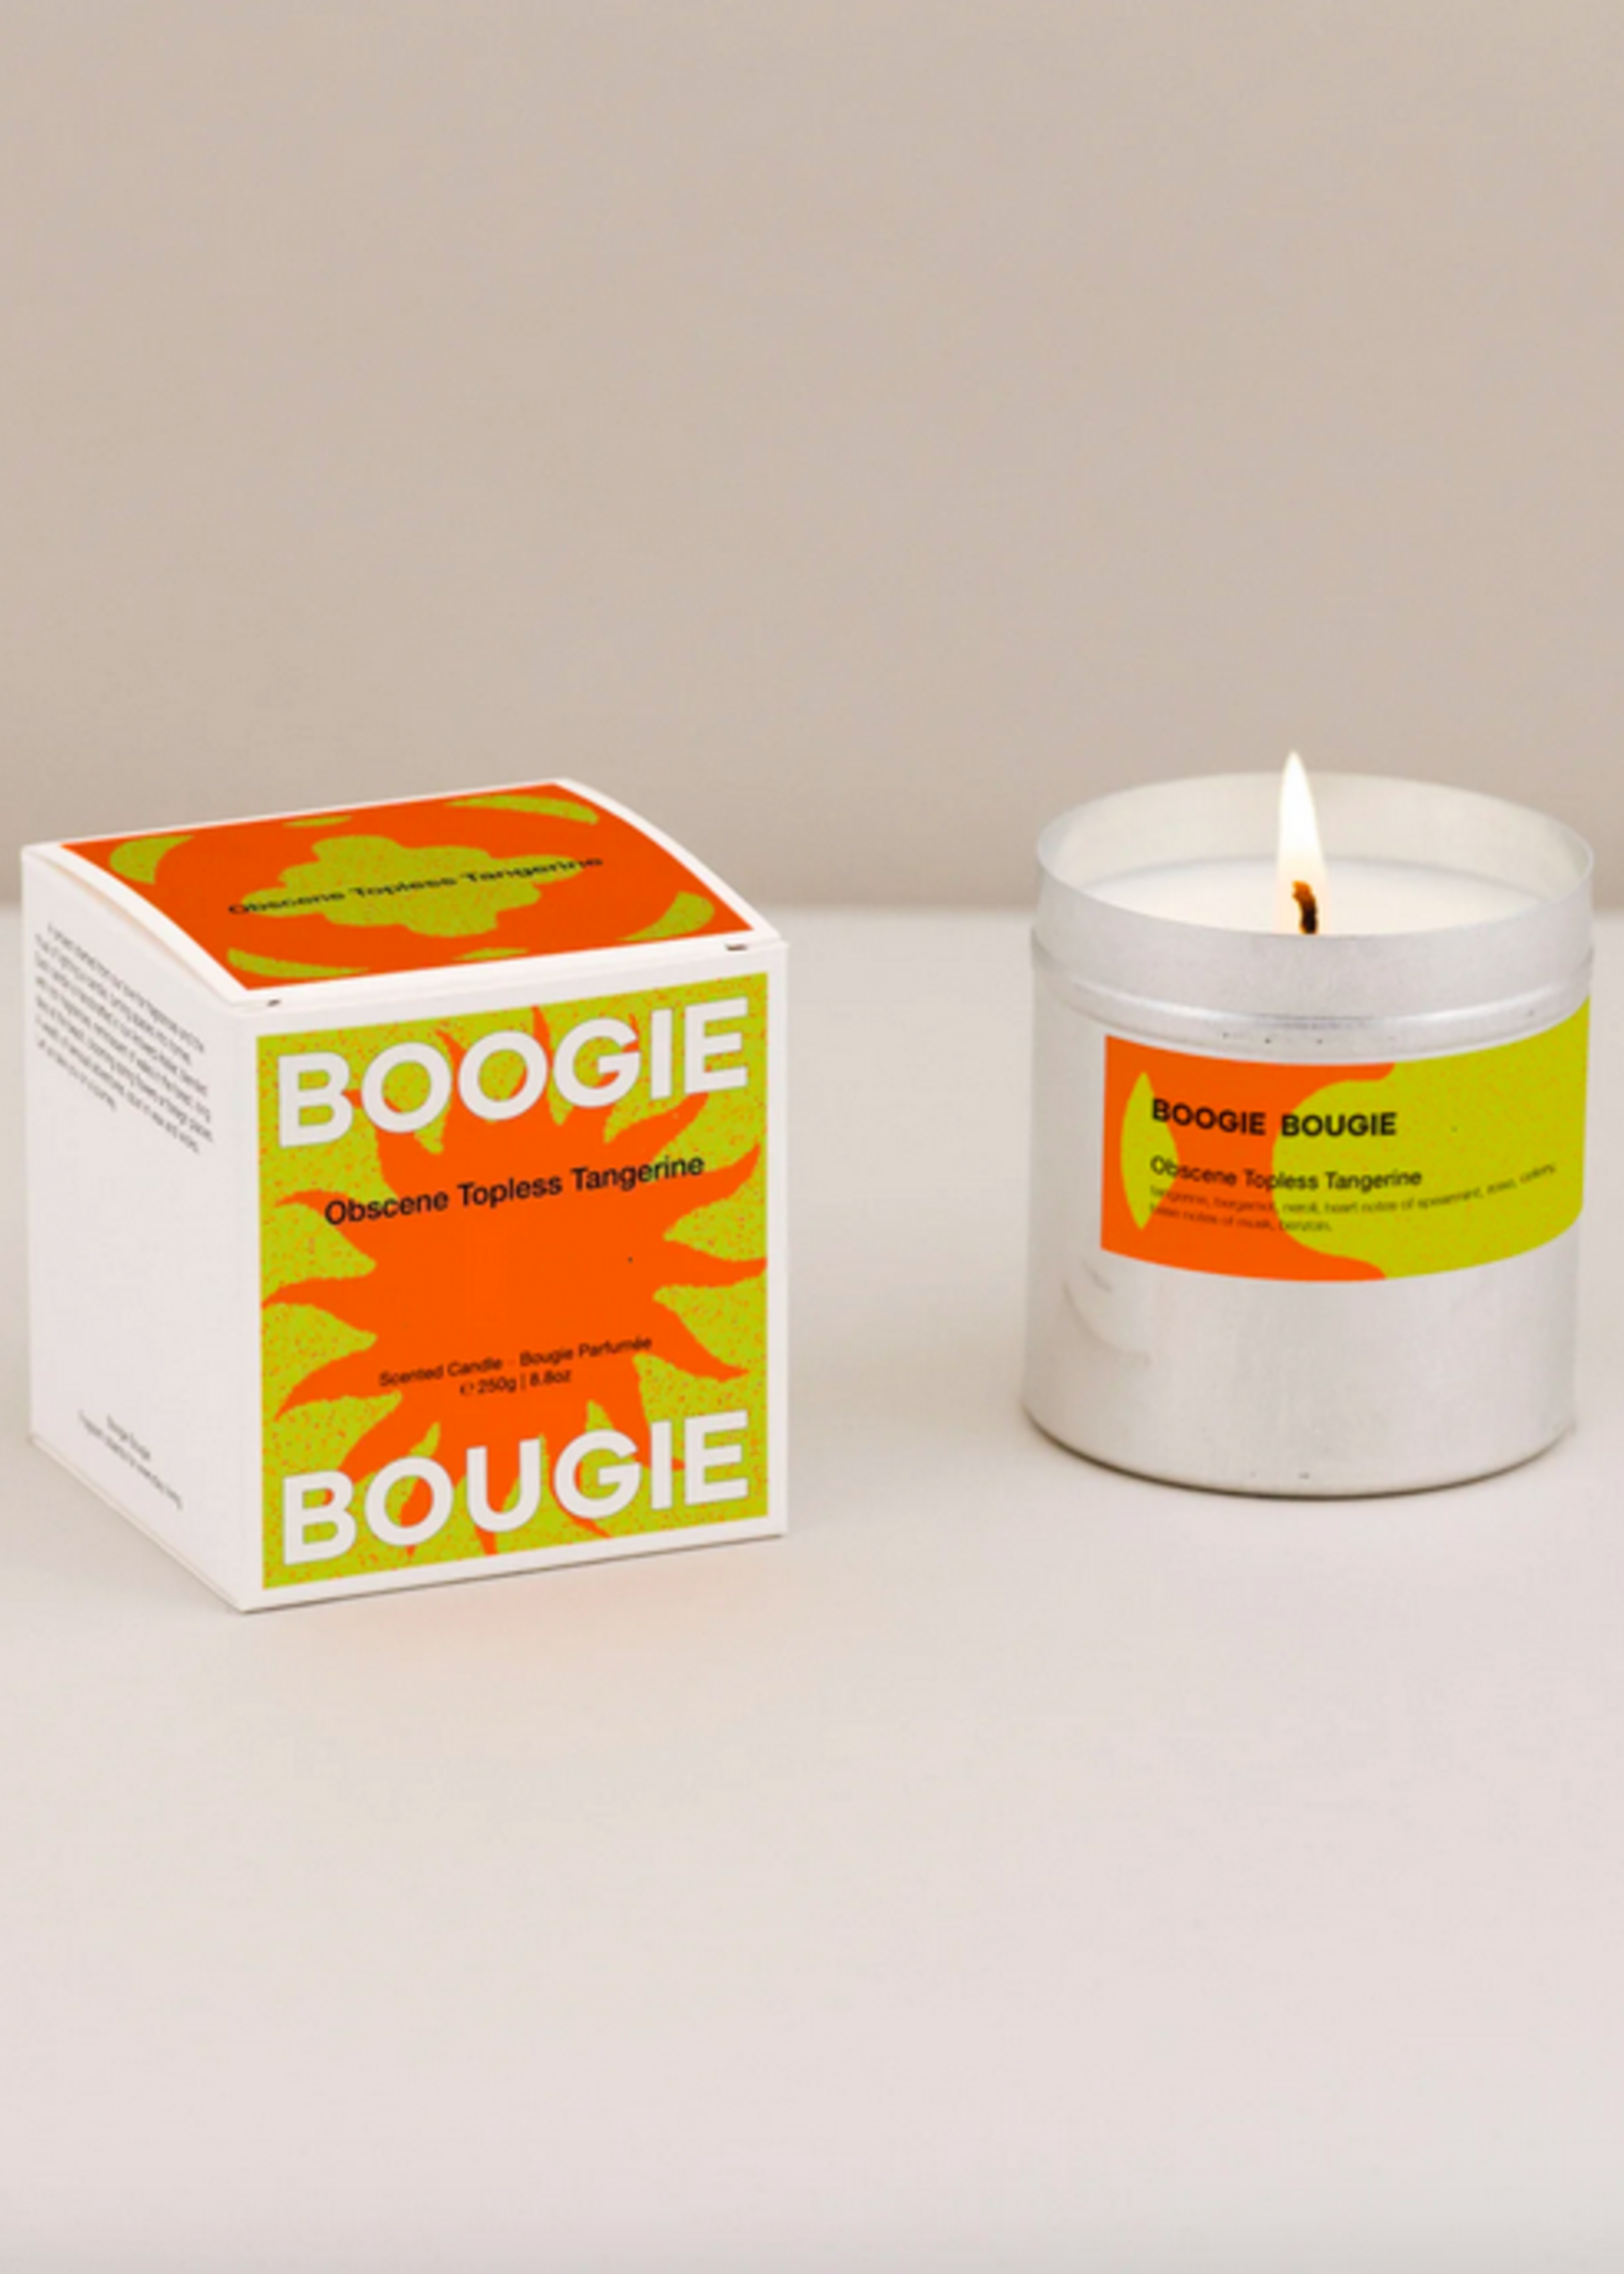 boogie bougie Boogie Bougie - Obscene Topless Tangerine